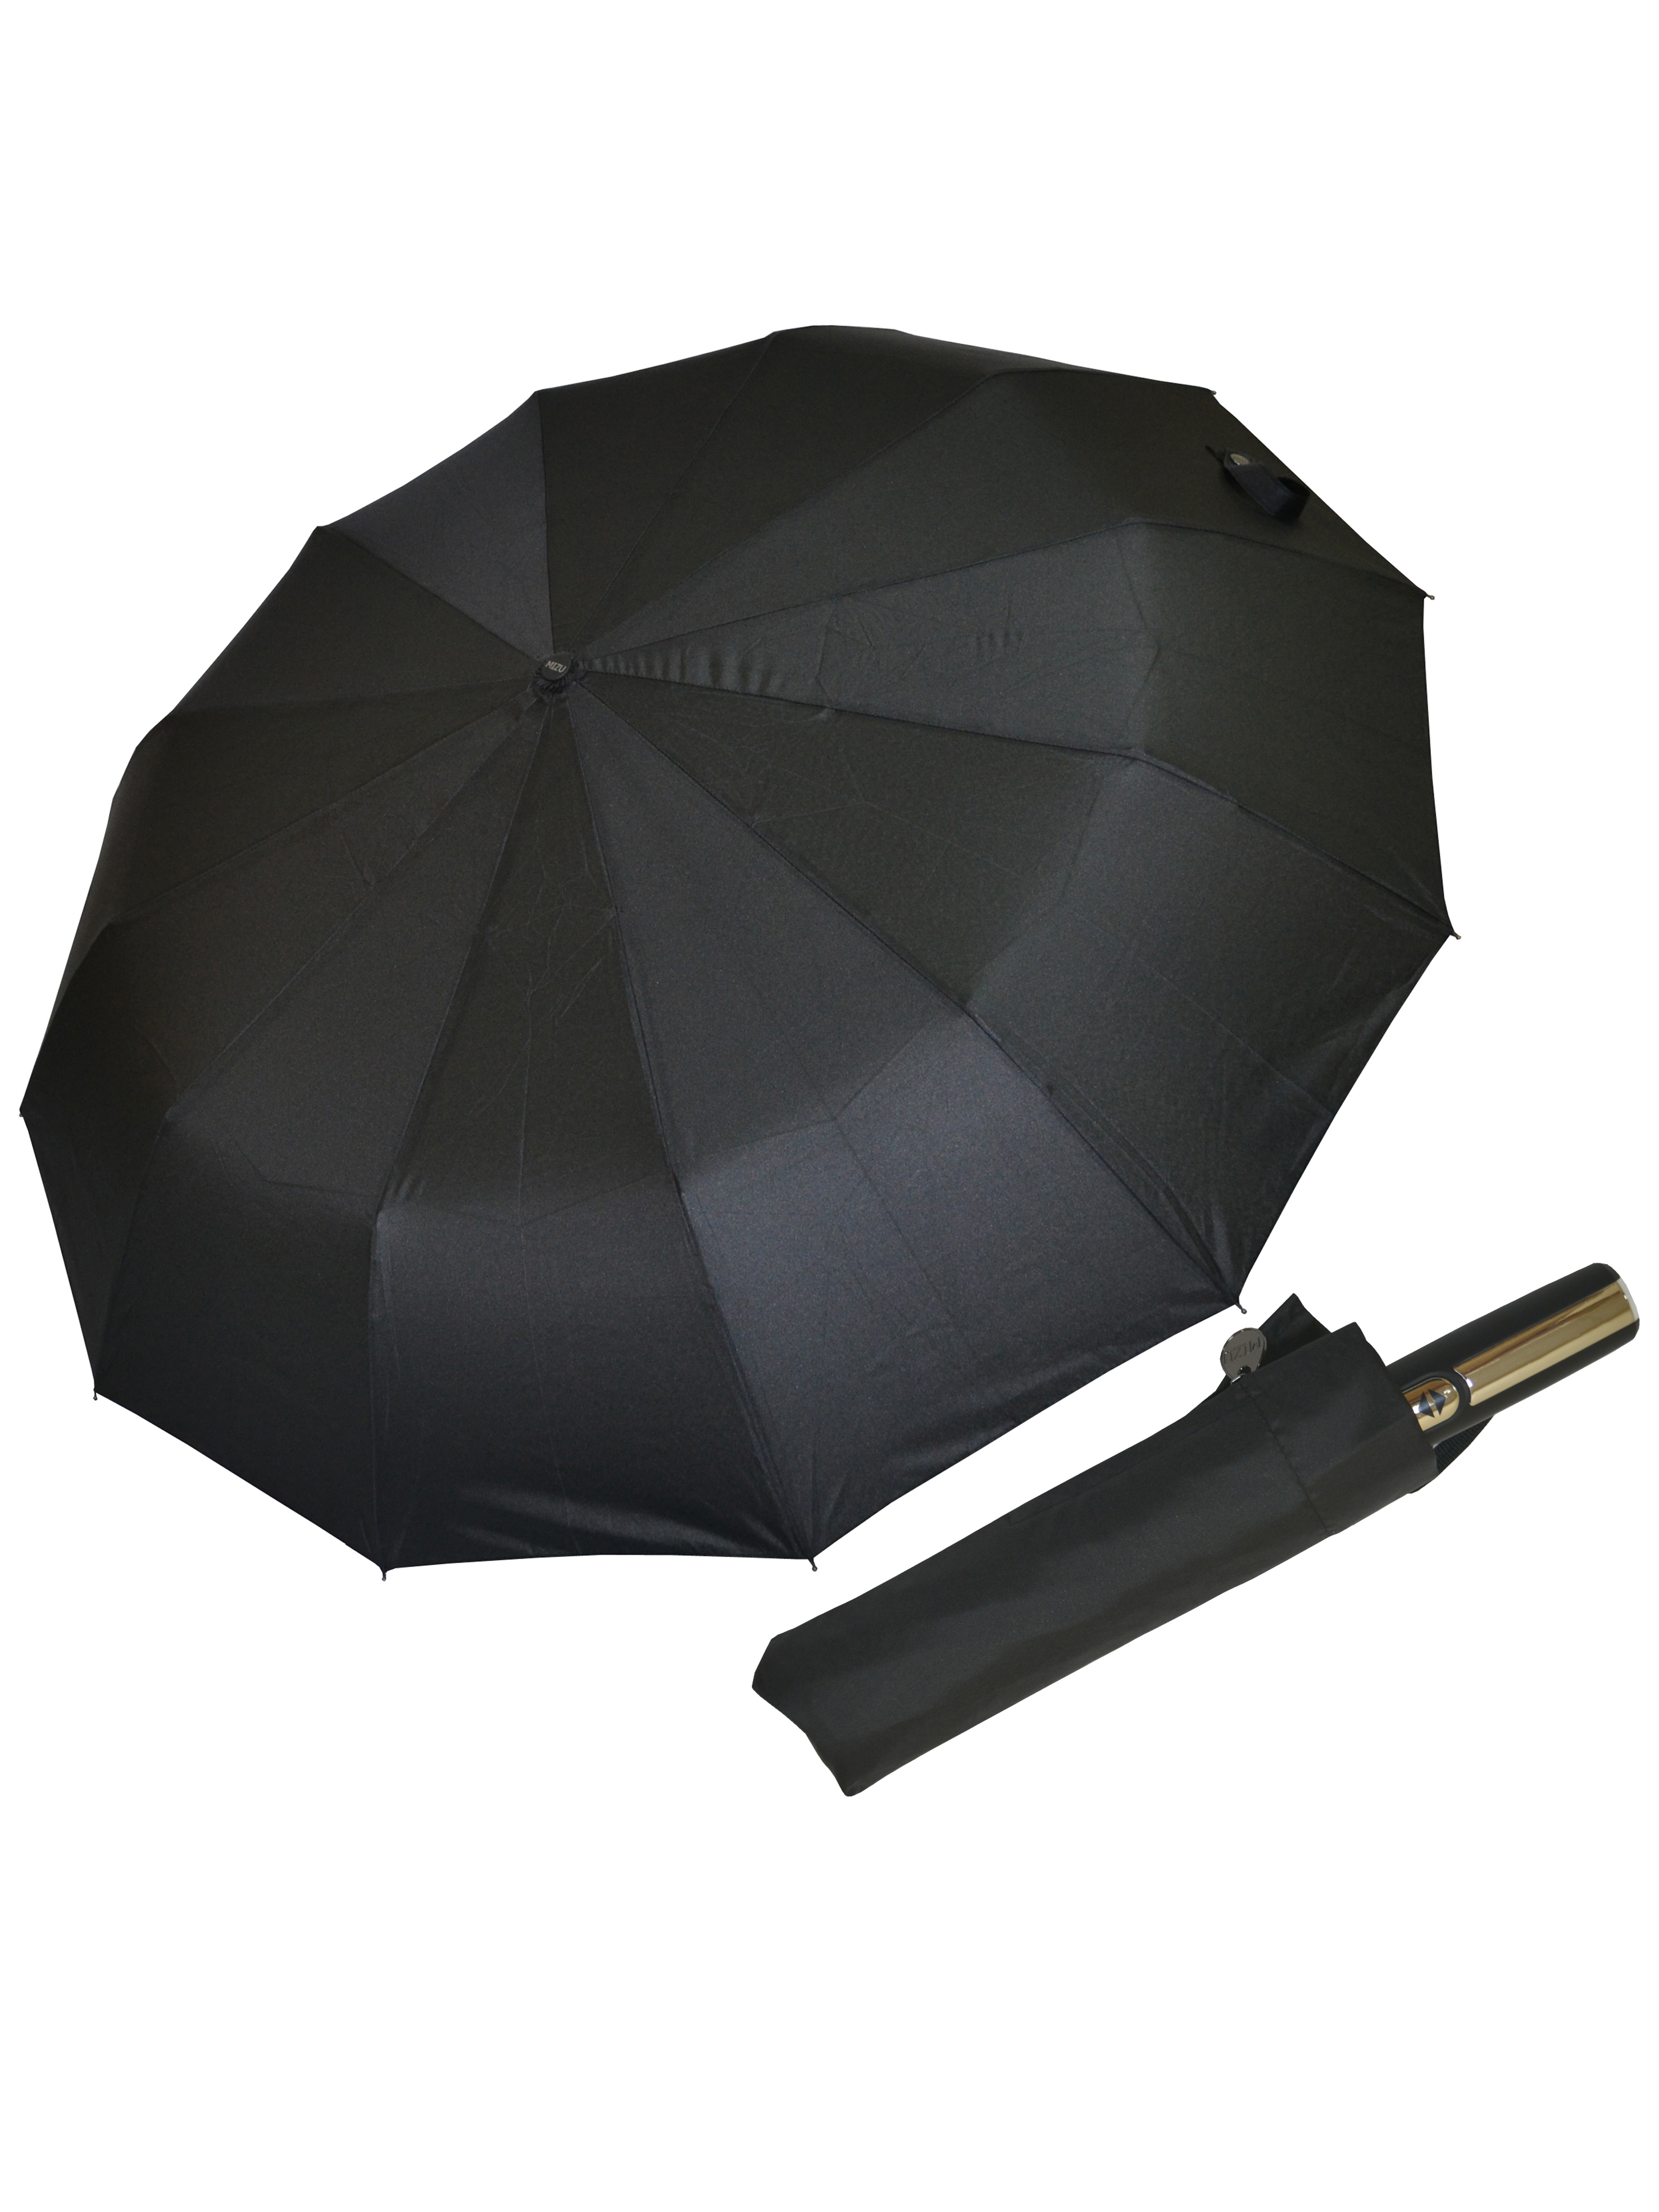 Купить зонт Mizu екохама Джапан 25 спиц